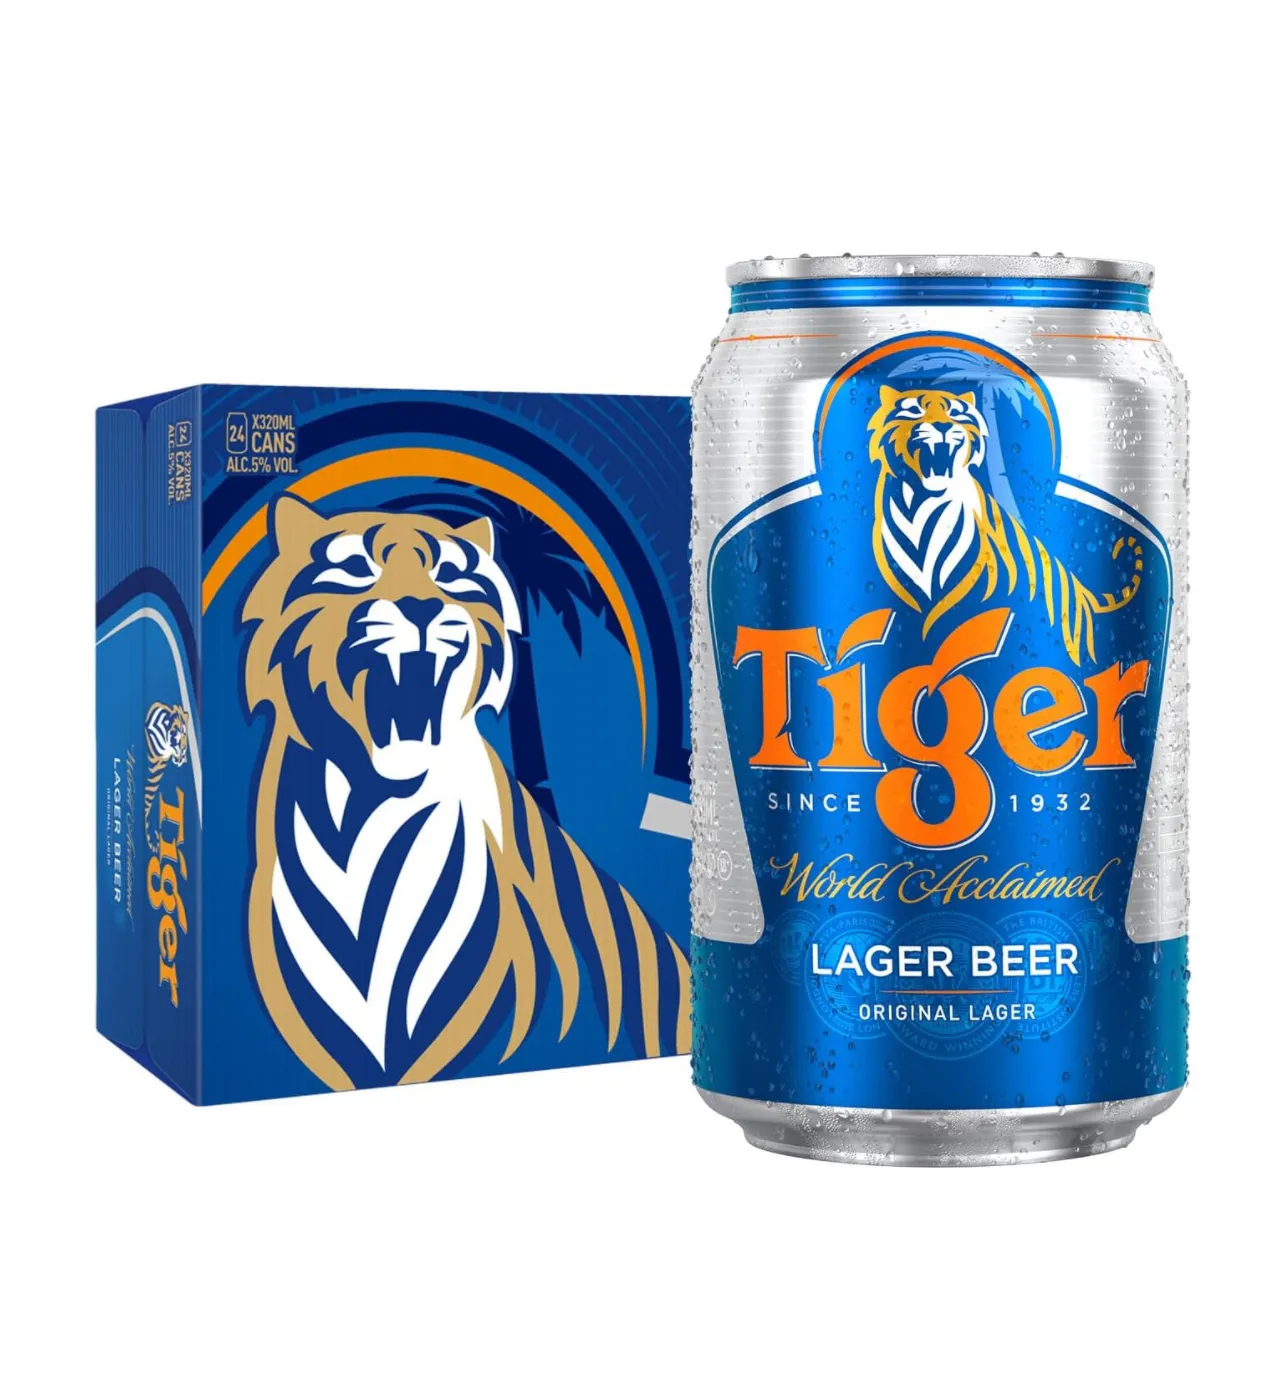 Premium Lager Beer, Tiger Original Larger Beer, award winning Asian lager, x24 pack count BEST Bulk Supplier